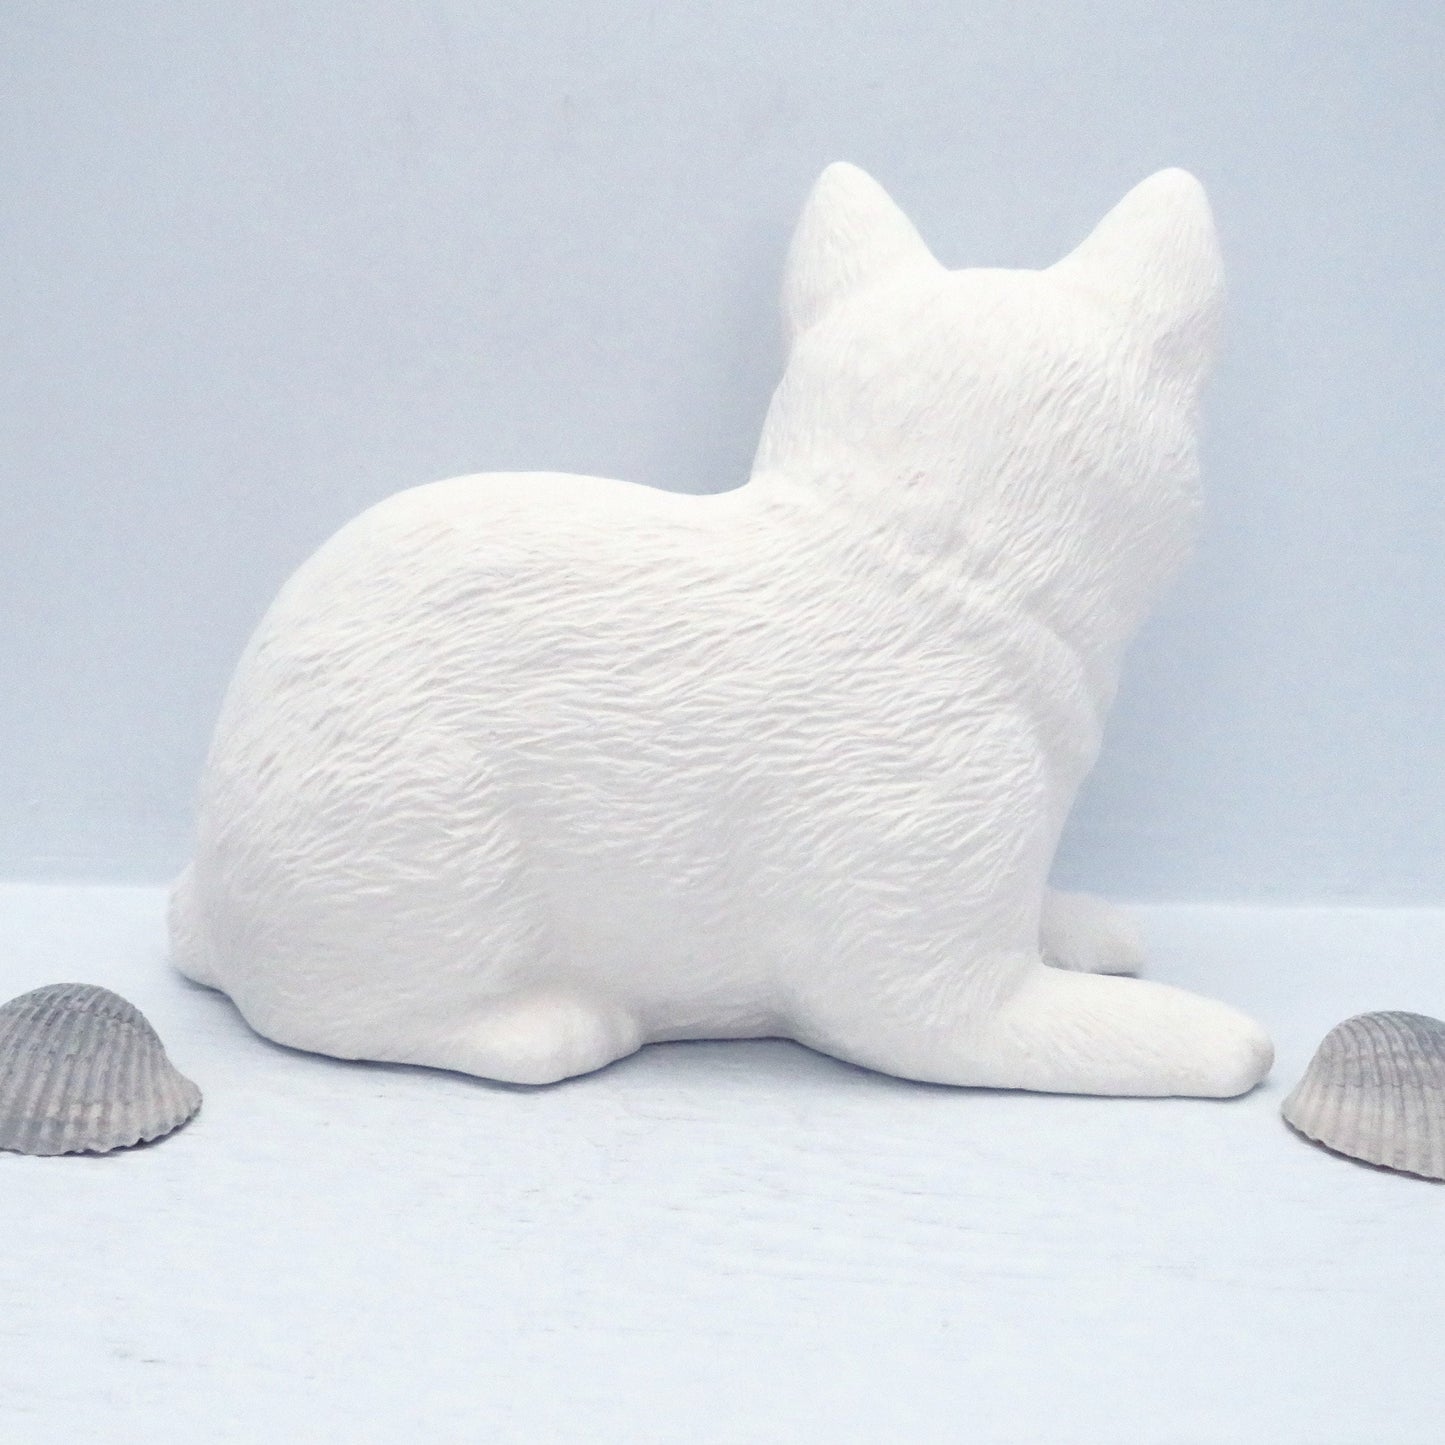 Ready to Paint Ceramic Bisque Cat Figurine / Ceramics to Paint / Paintable Cat Statue / Cat Decor / Cat Gift / Cat Mom / Unpainted Bisque